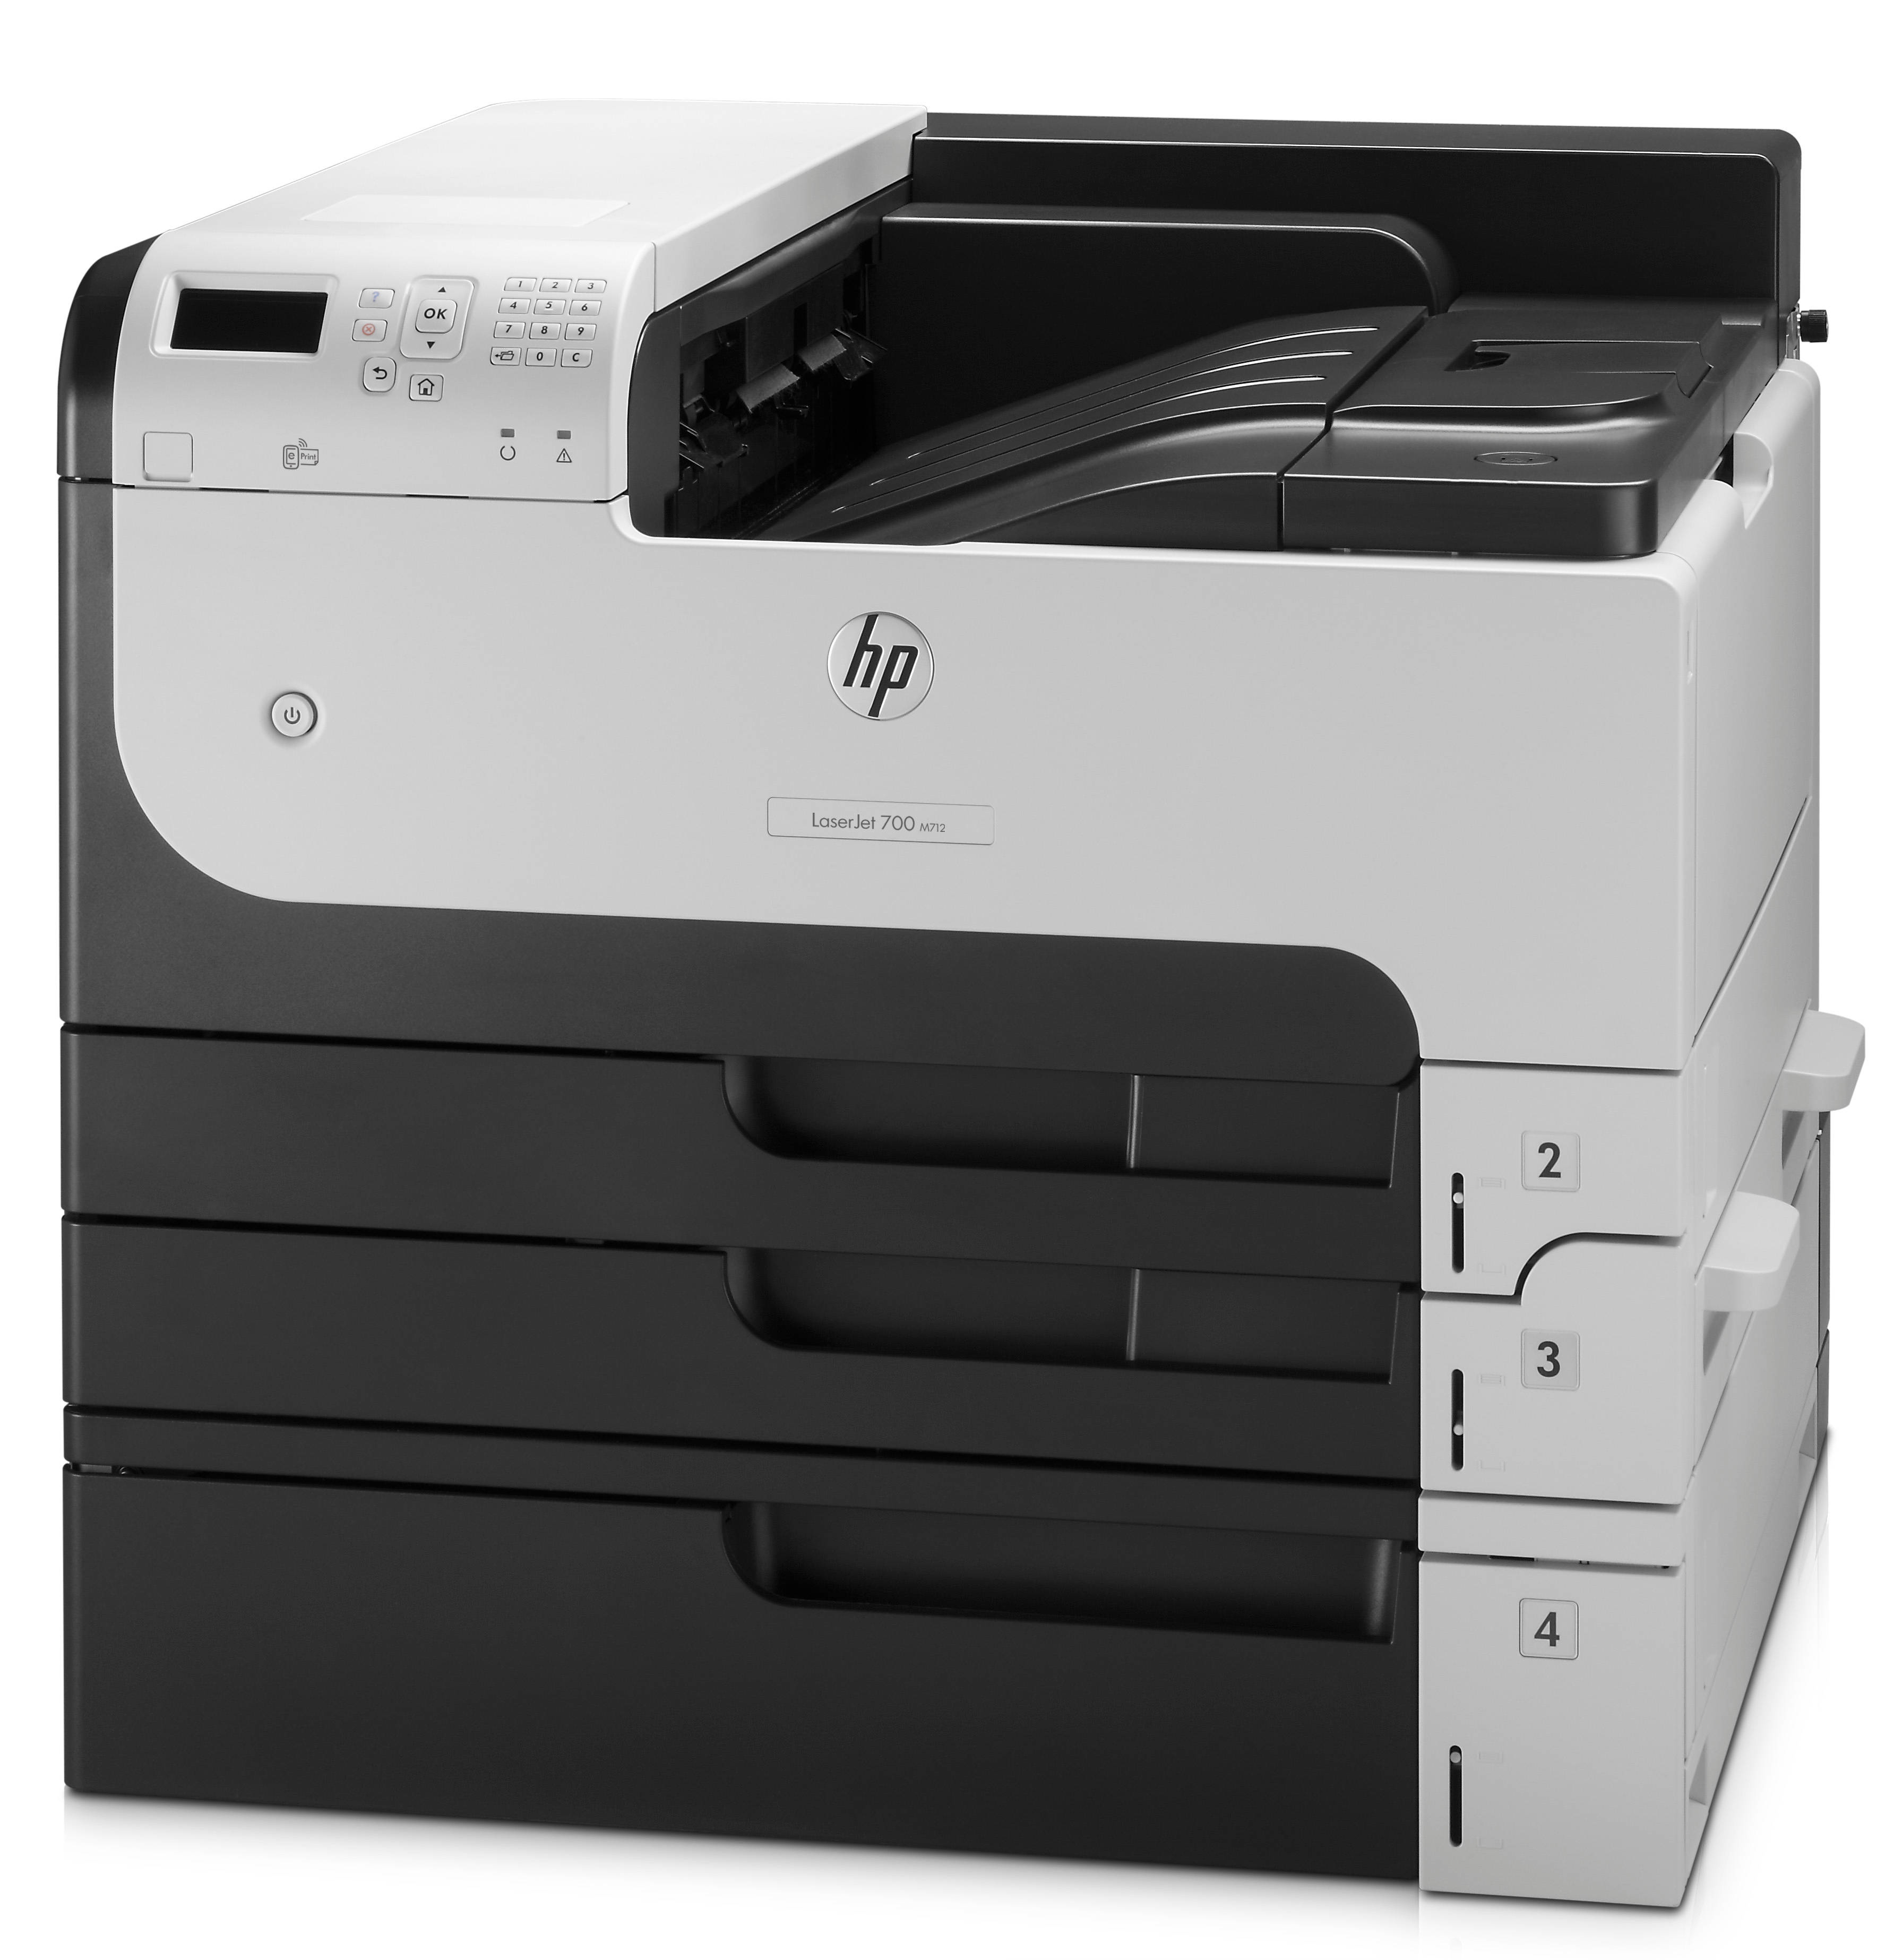 hp printer utility help